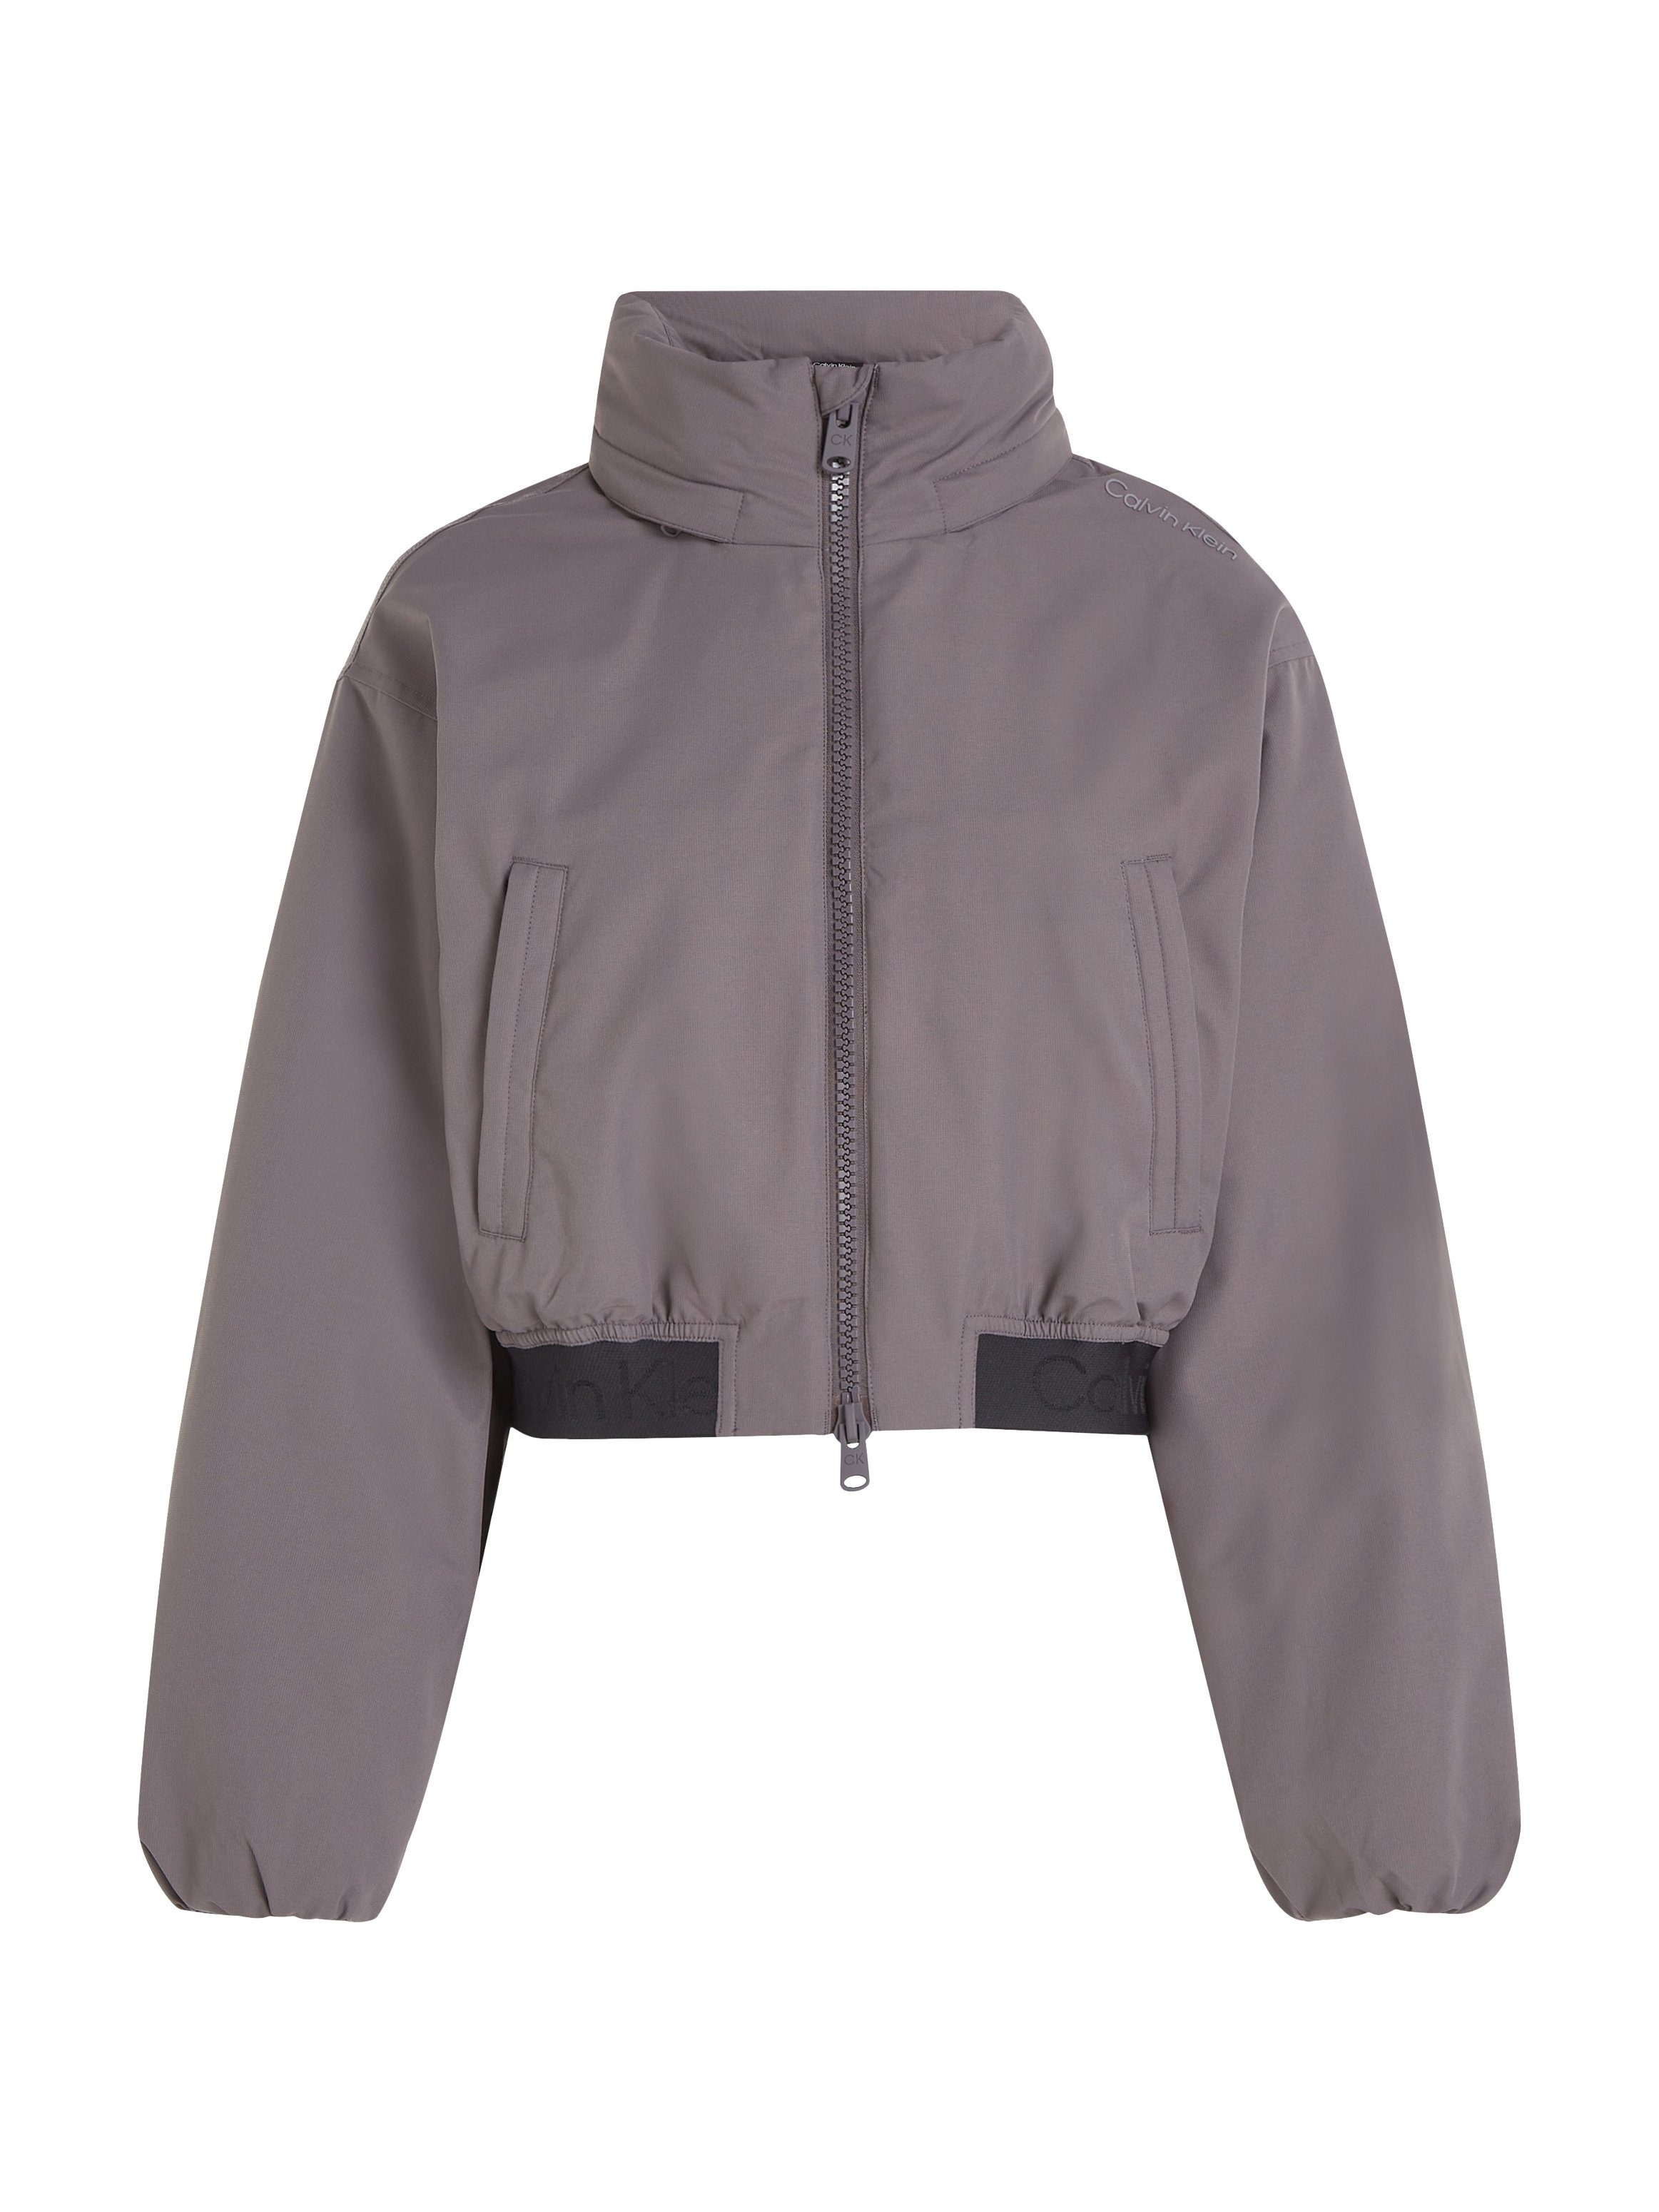 Calvin Klein Sport Outdoorjacke PW Padded - Jacket grau